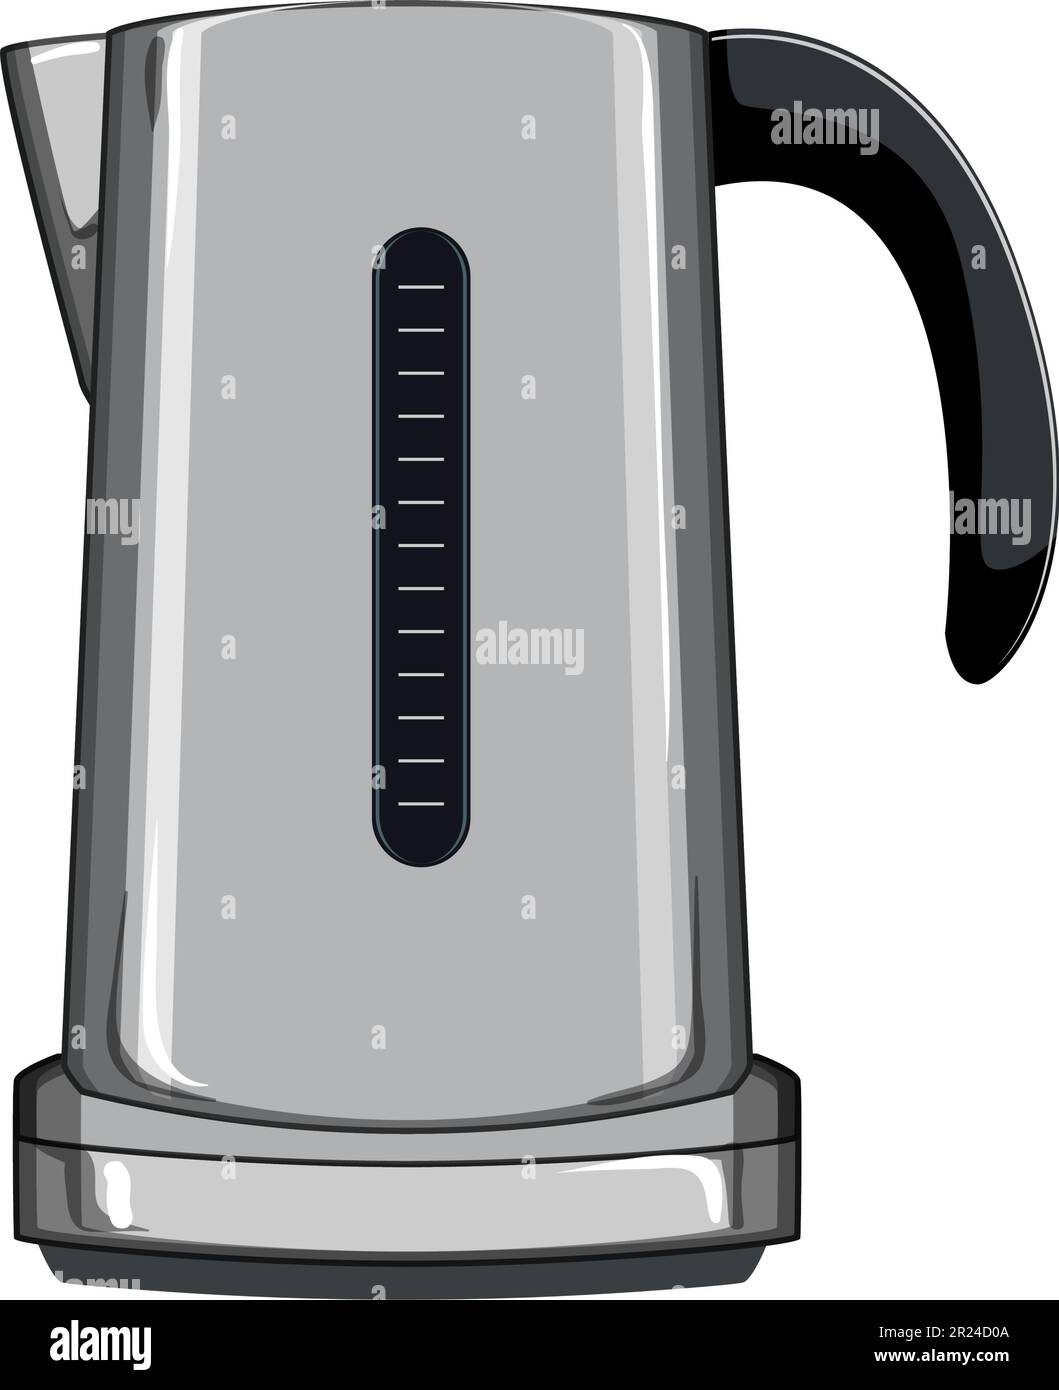 al electric kettle cartoon vector illustration Stock Vector